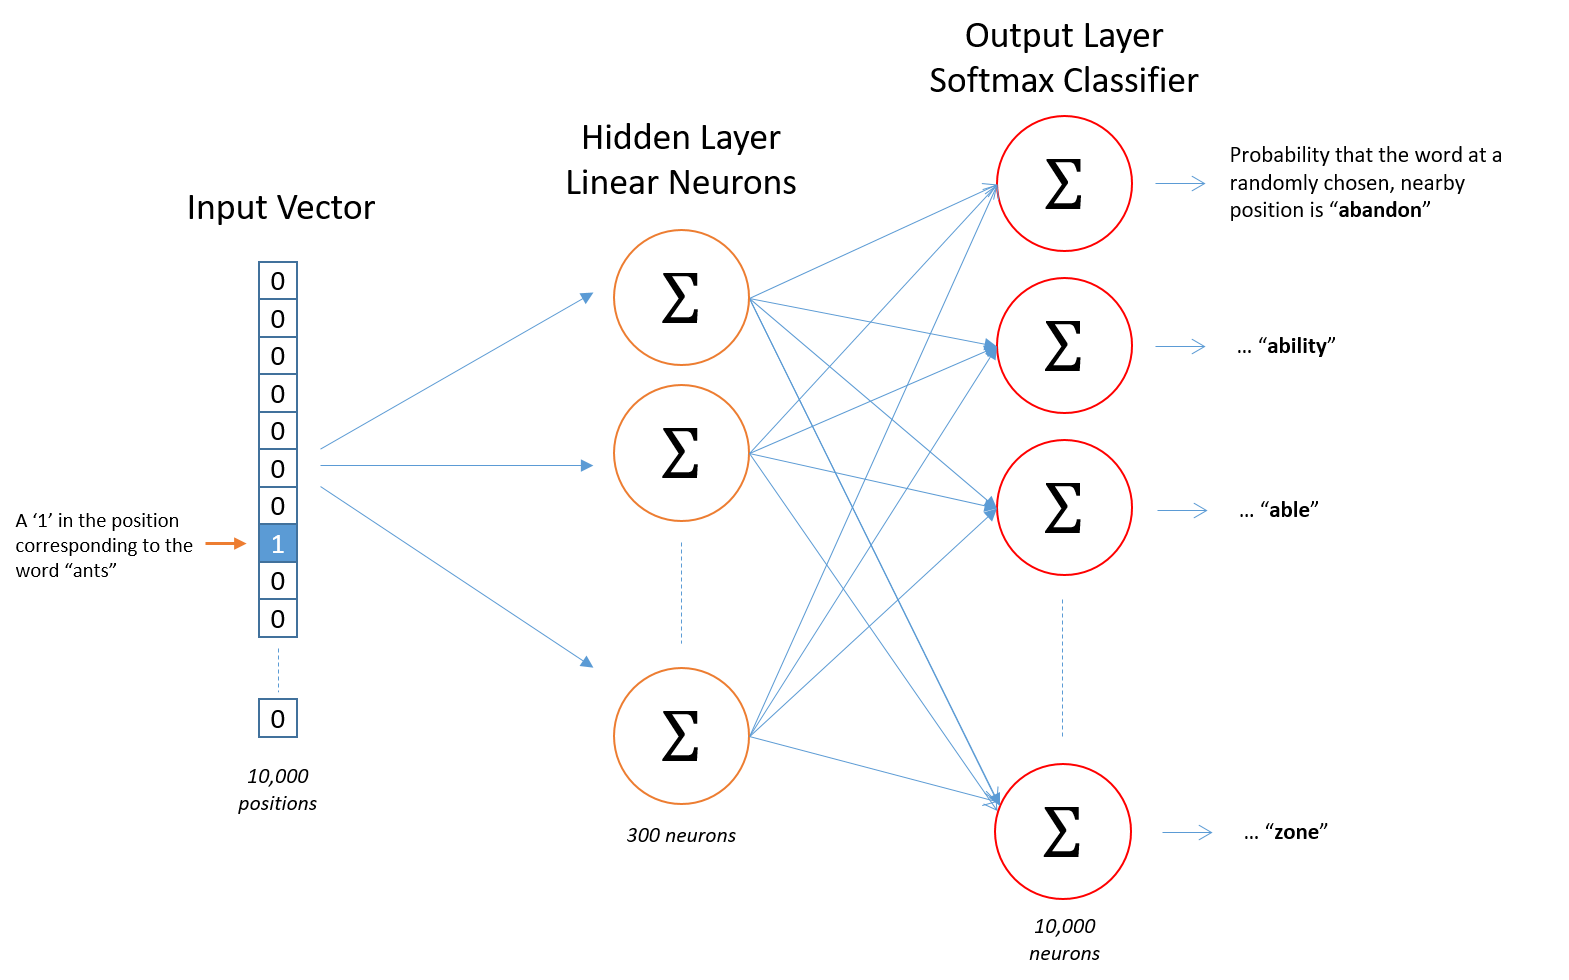 Skip-gram Neural Network Architecture